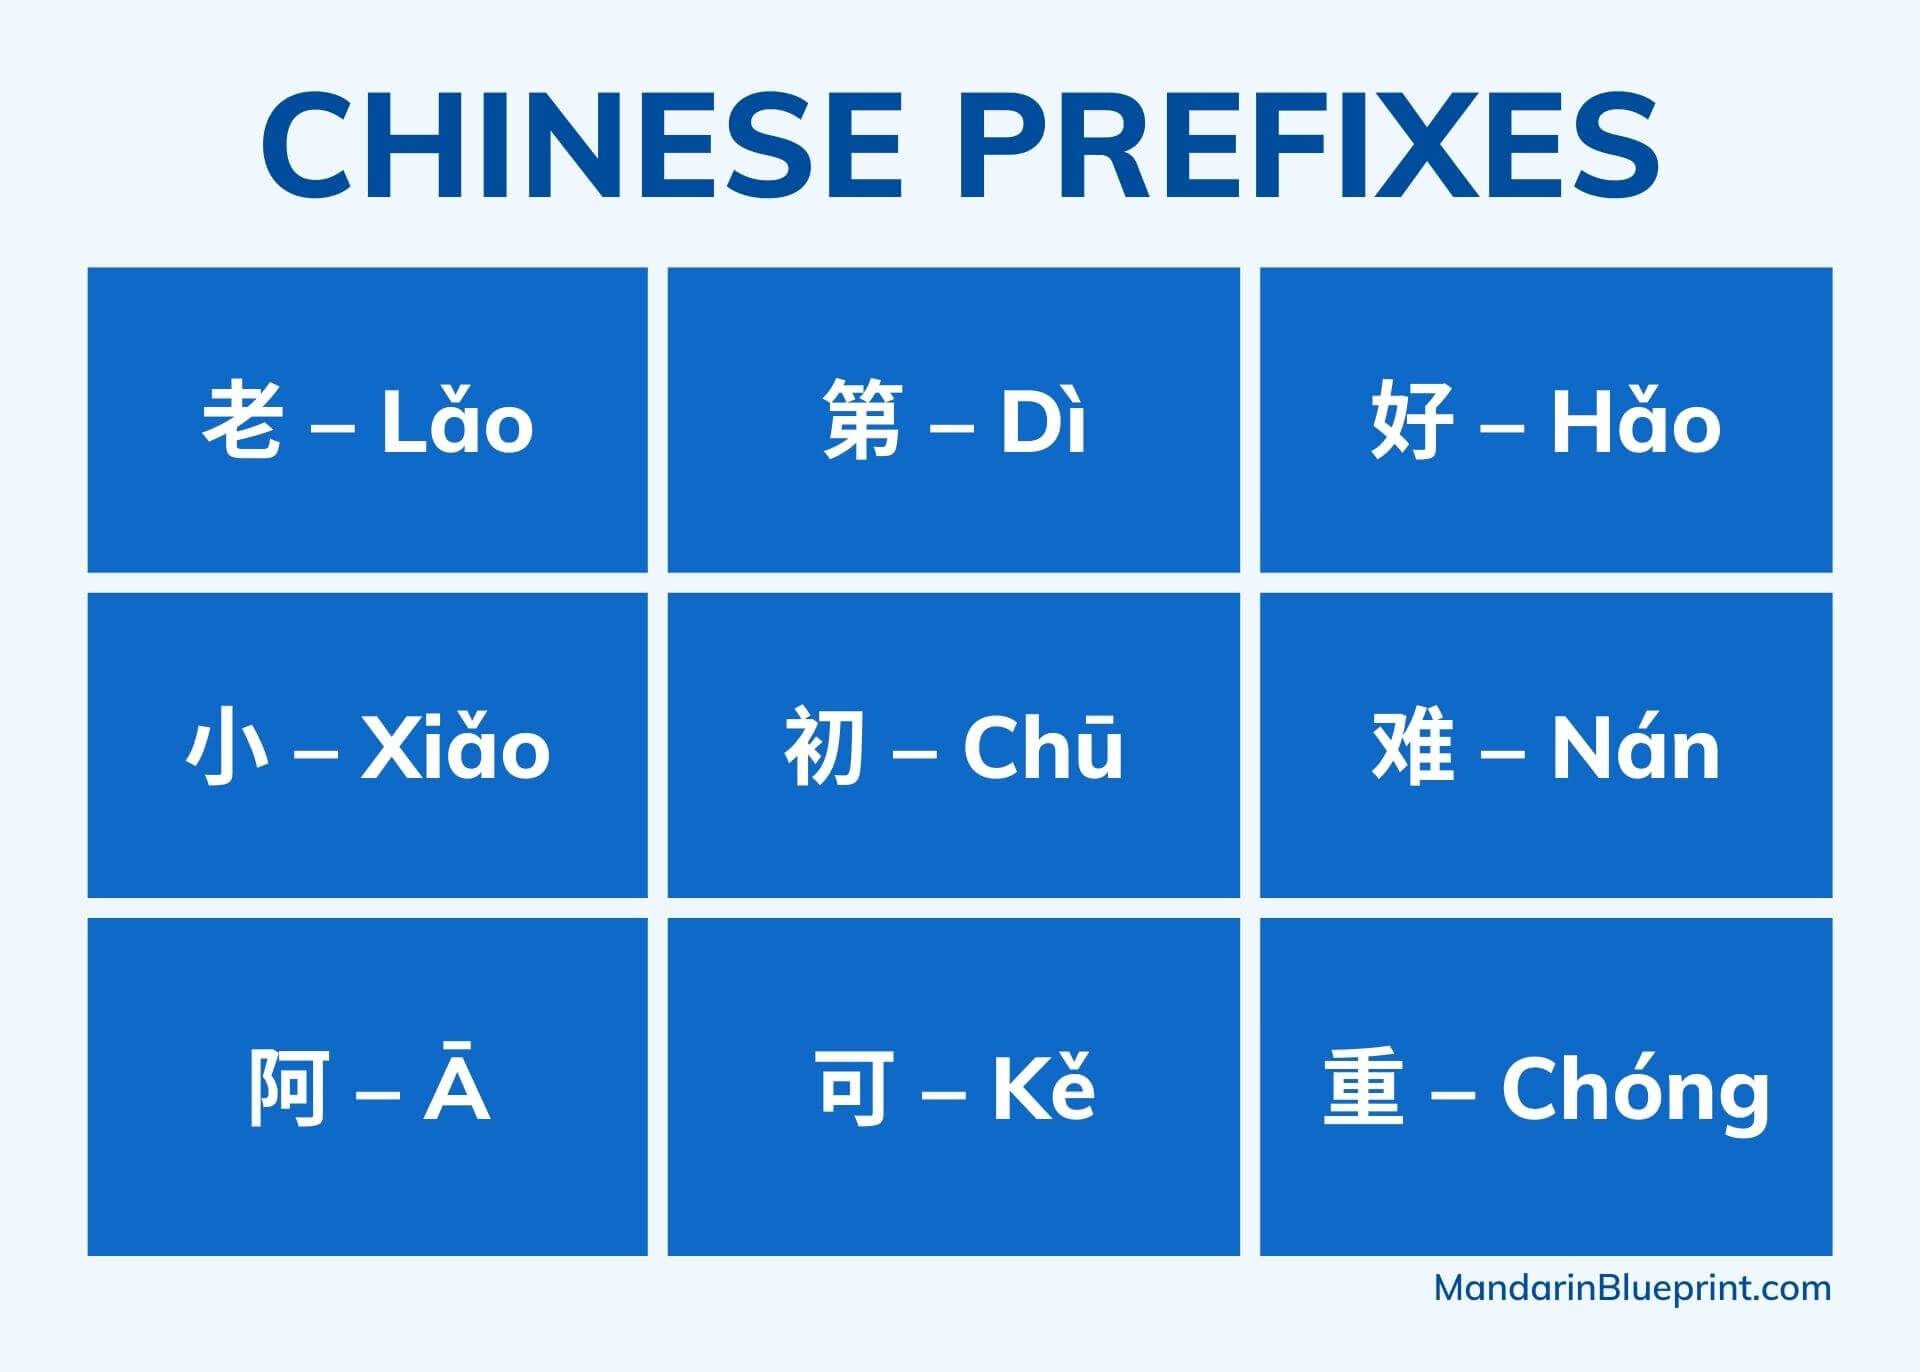 Chinese prefixes